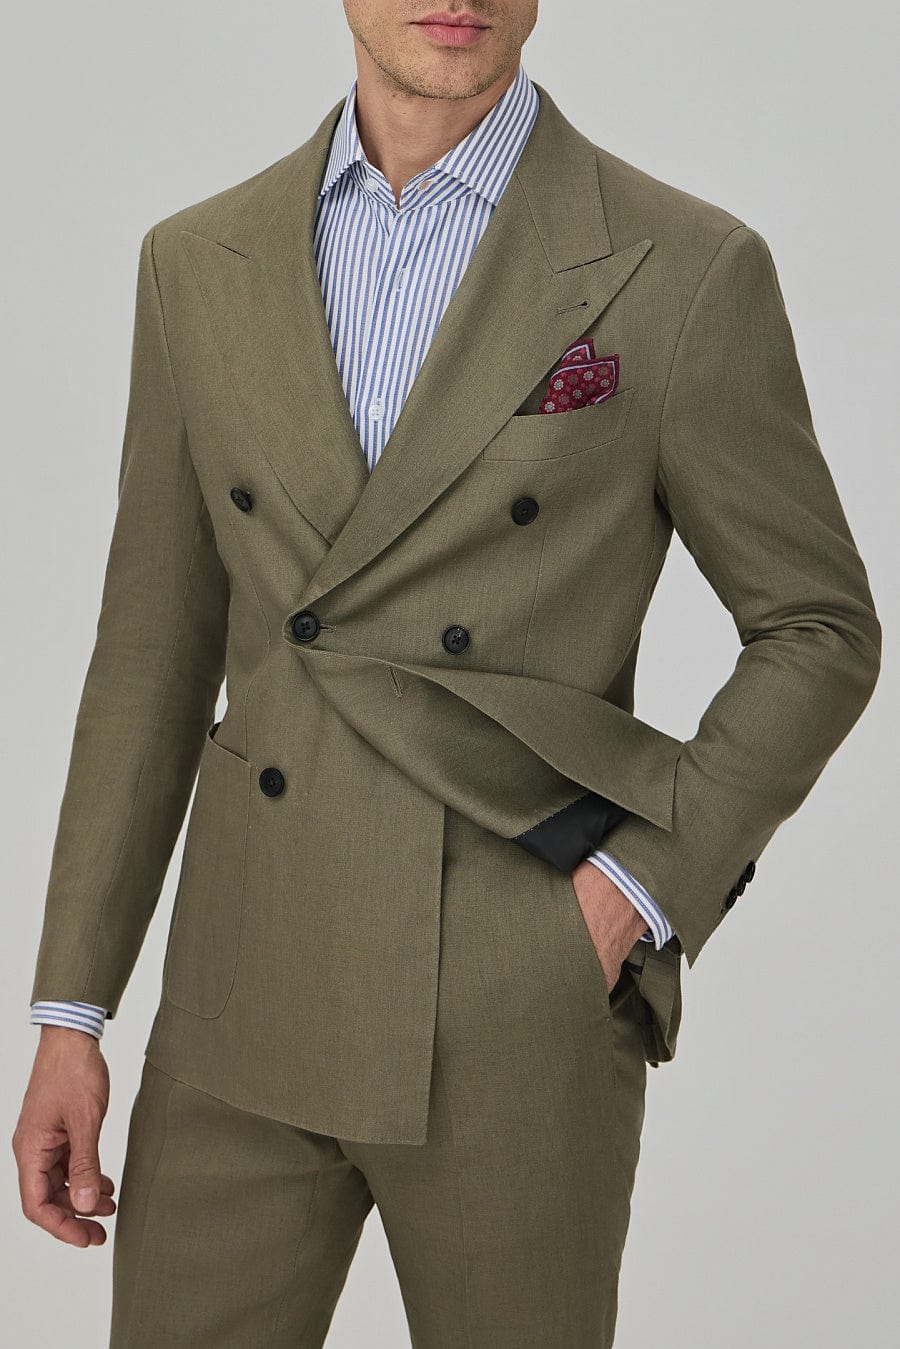 aesido Business Casual 2 Piece Olive Green Peak Lapel Men's Suit (Blazer+Pants)